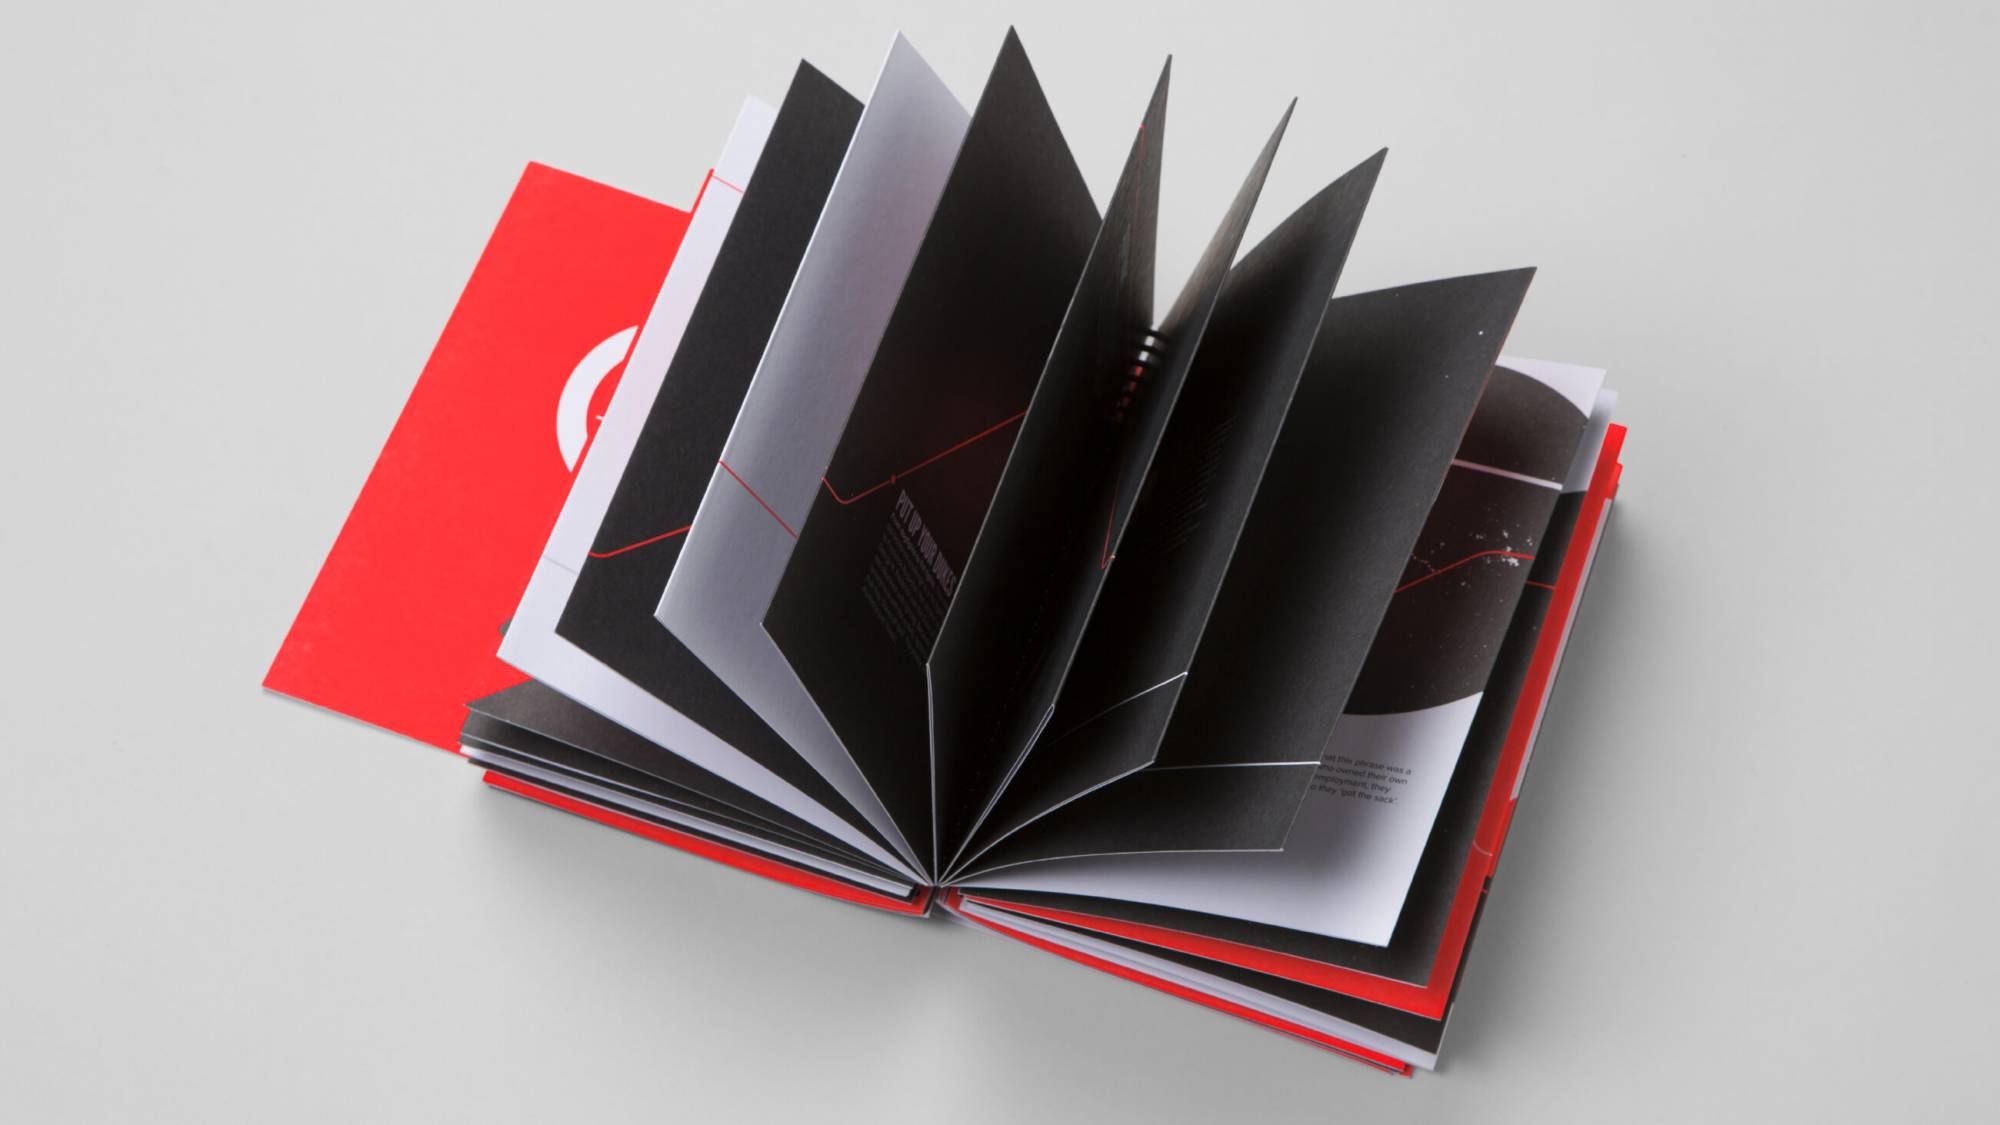 DAIS - Ten Year Project (2010 - 2019) Photo internal spreads of book